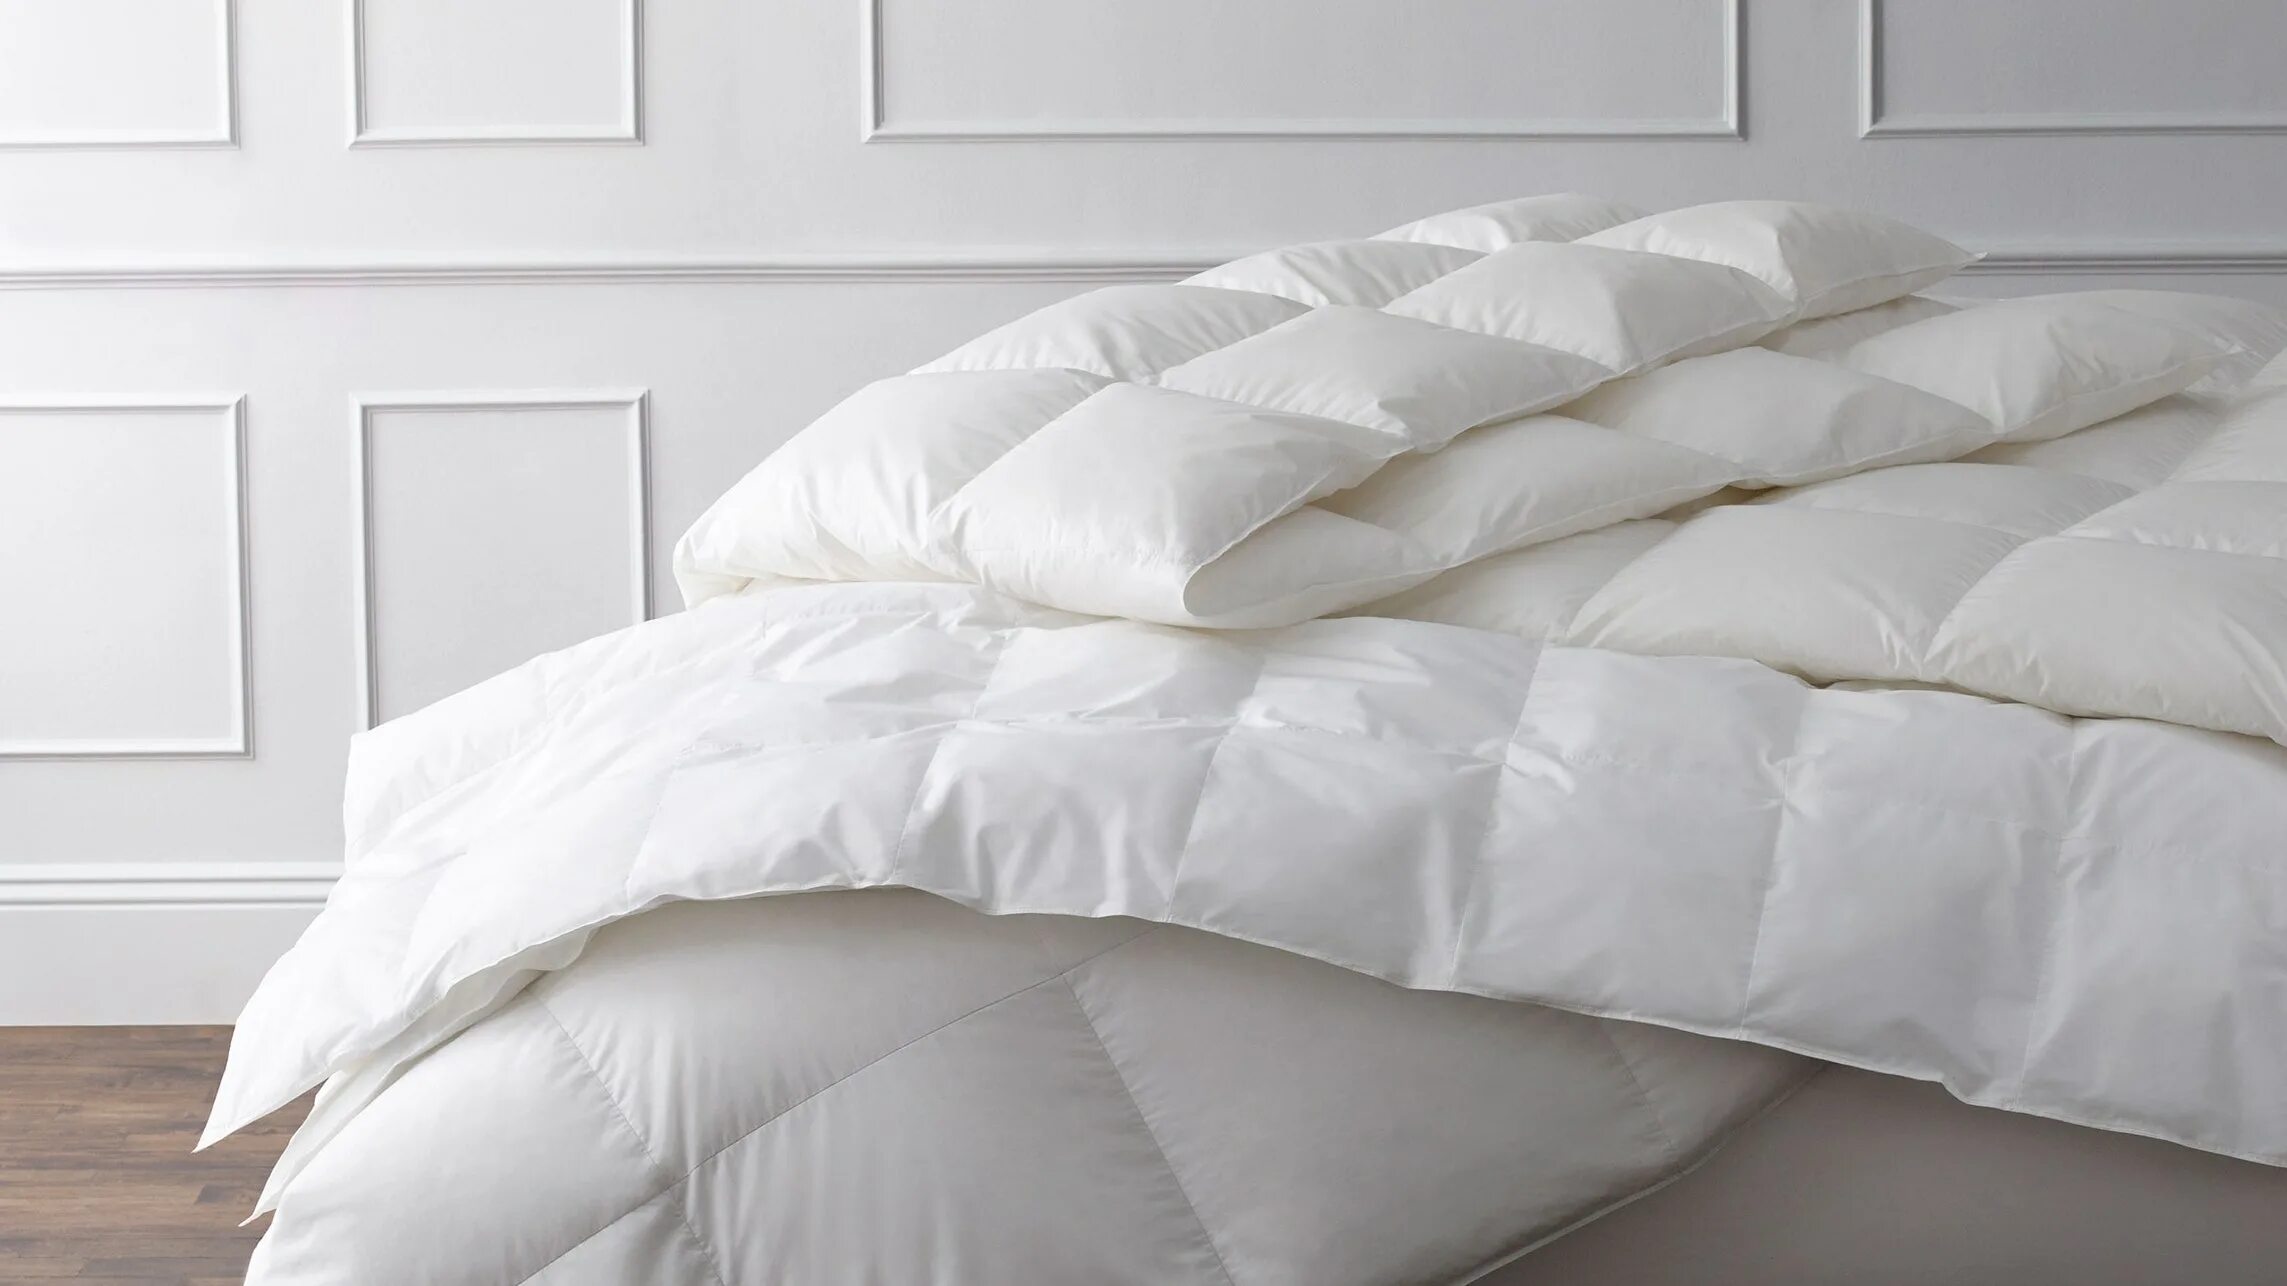 Белое одеяло. Одеяло премиум класса. Одеяло на кровати.